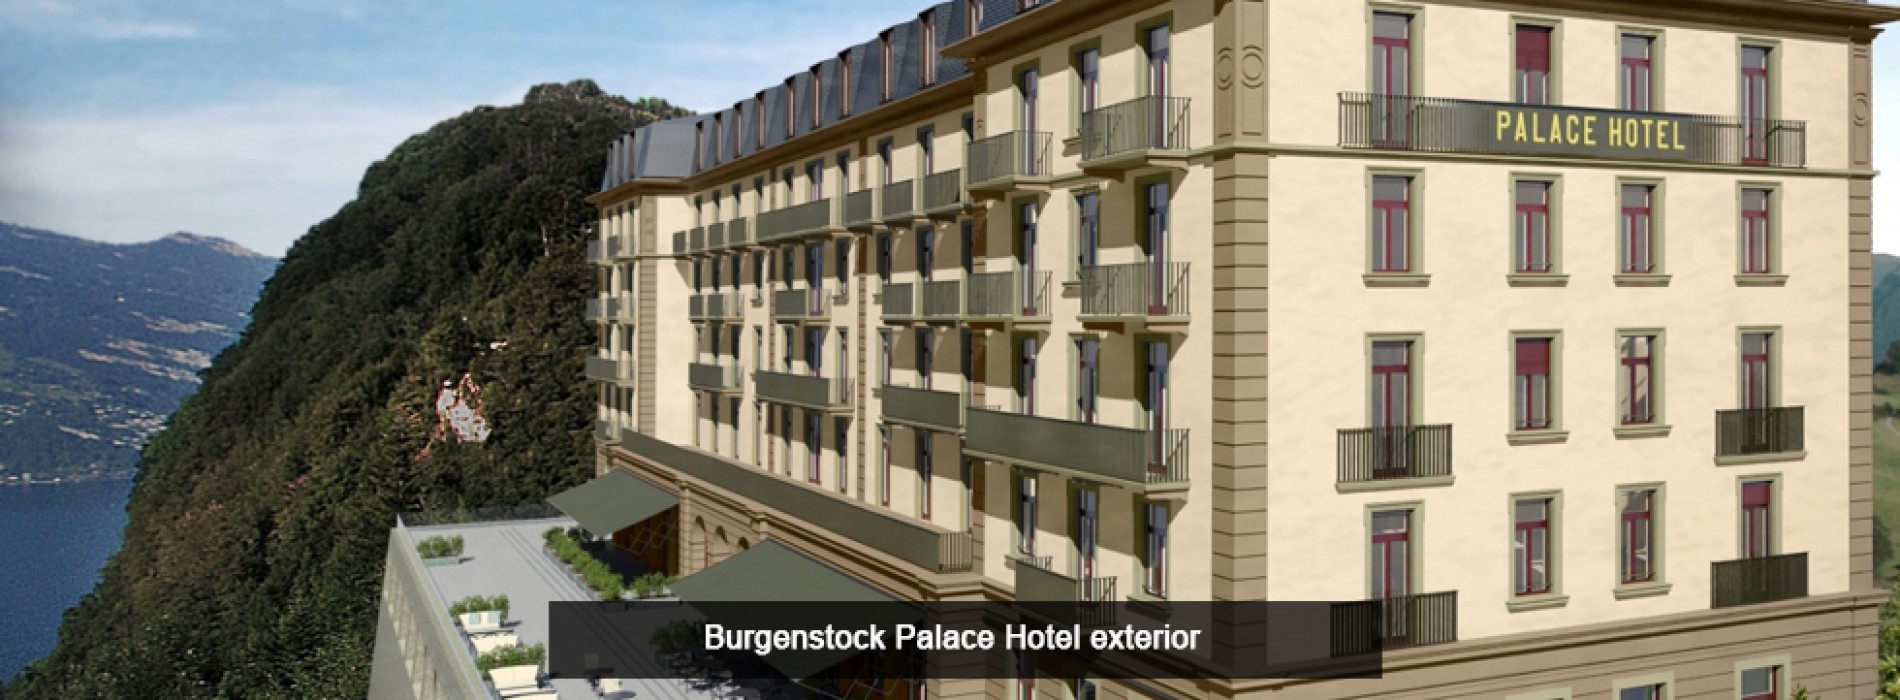 Luxury Bürgenstock resort to boost GCC visitors to Switzerland